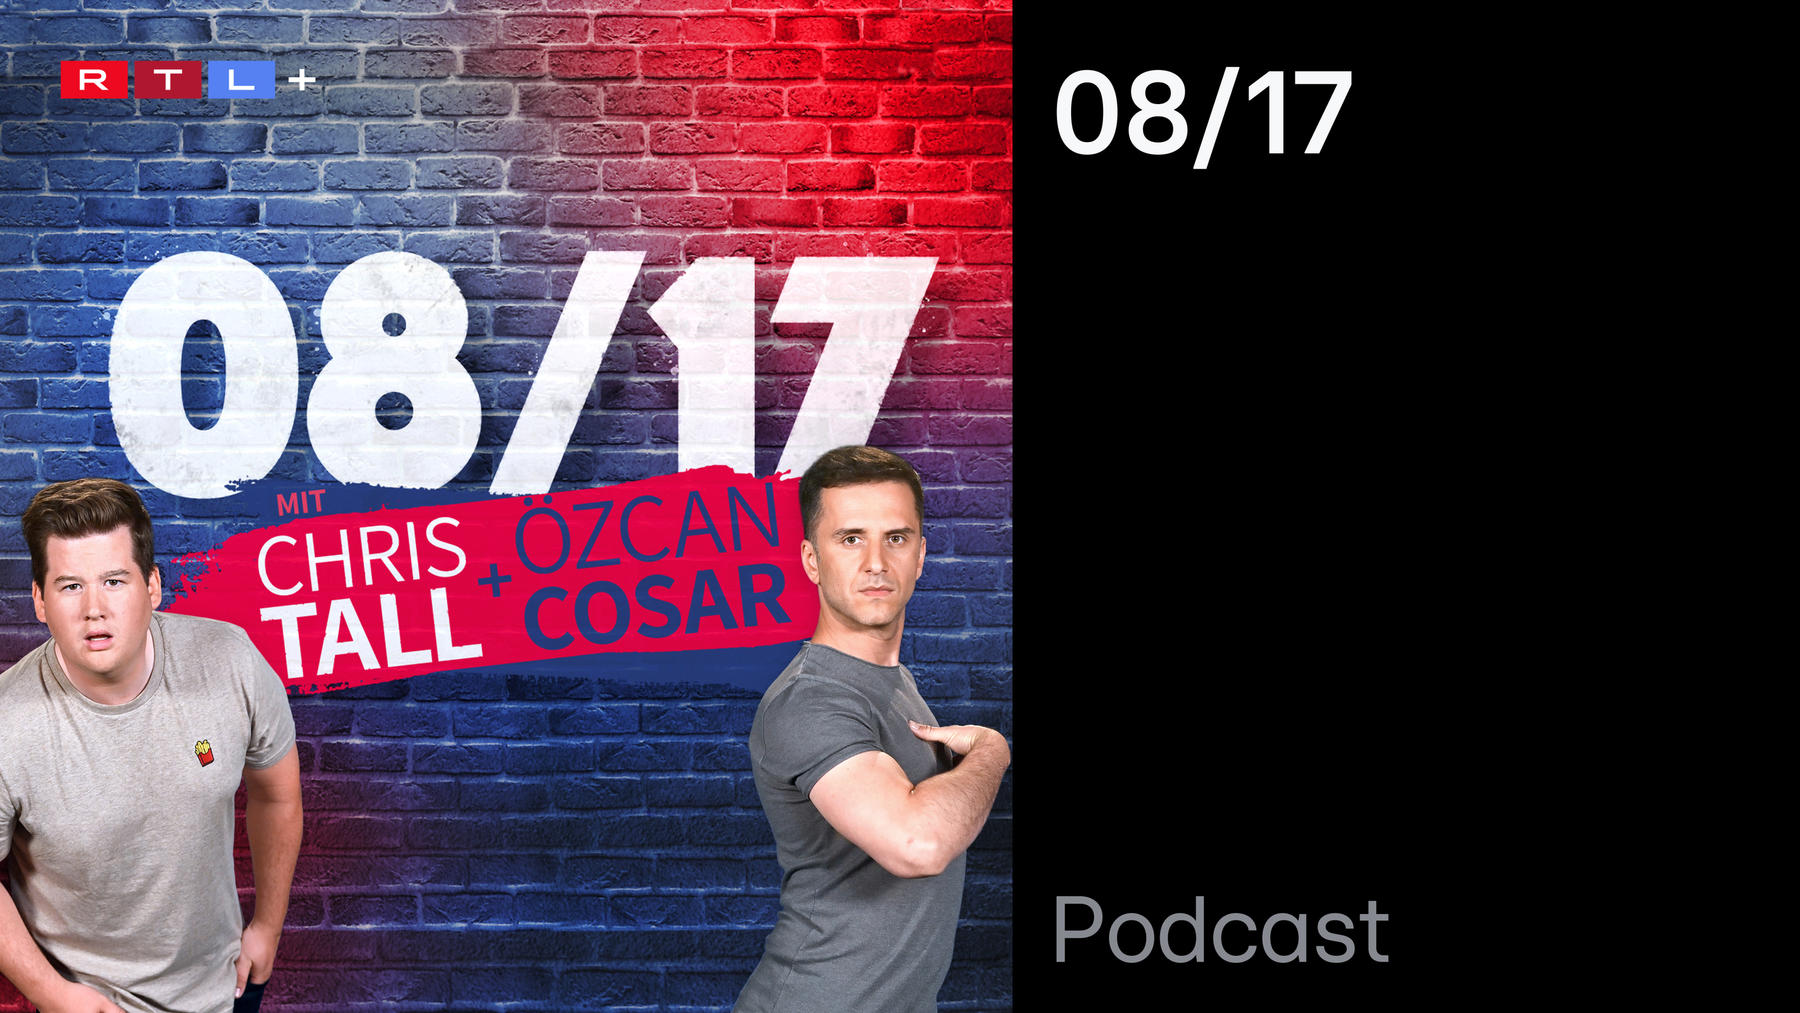 Podcast: 08/17 – mit Chris Tall und Özcan Cosar